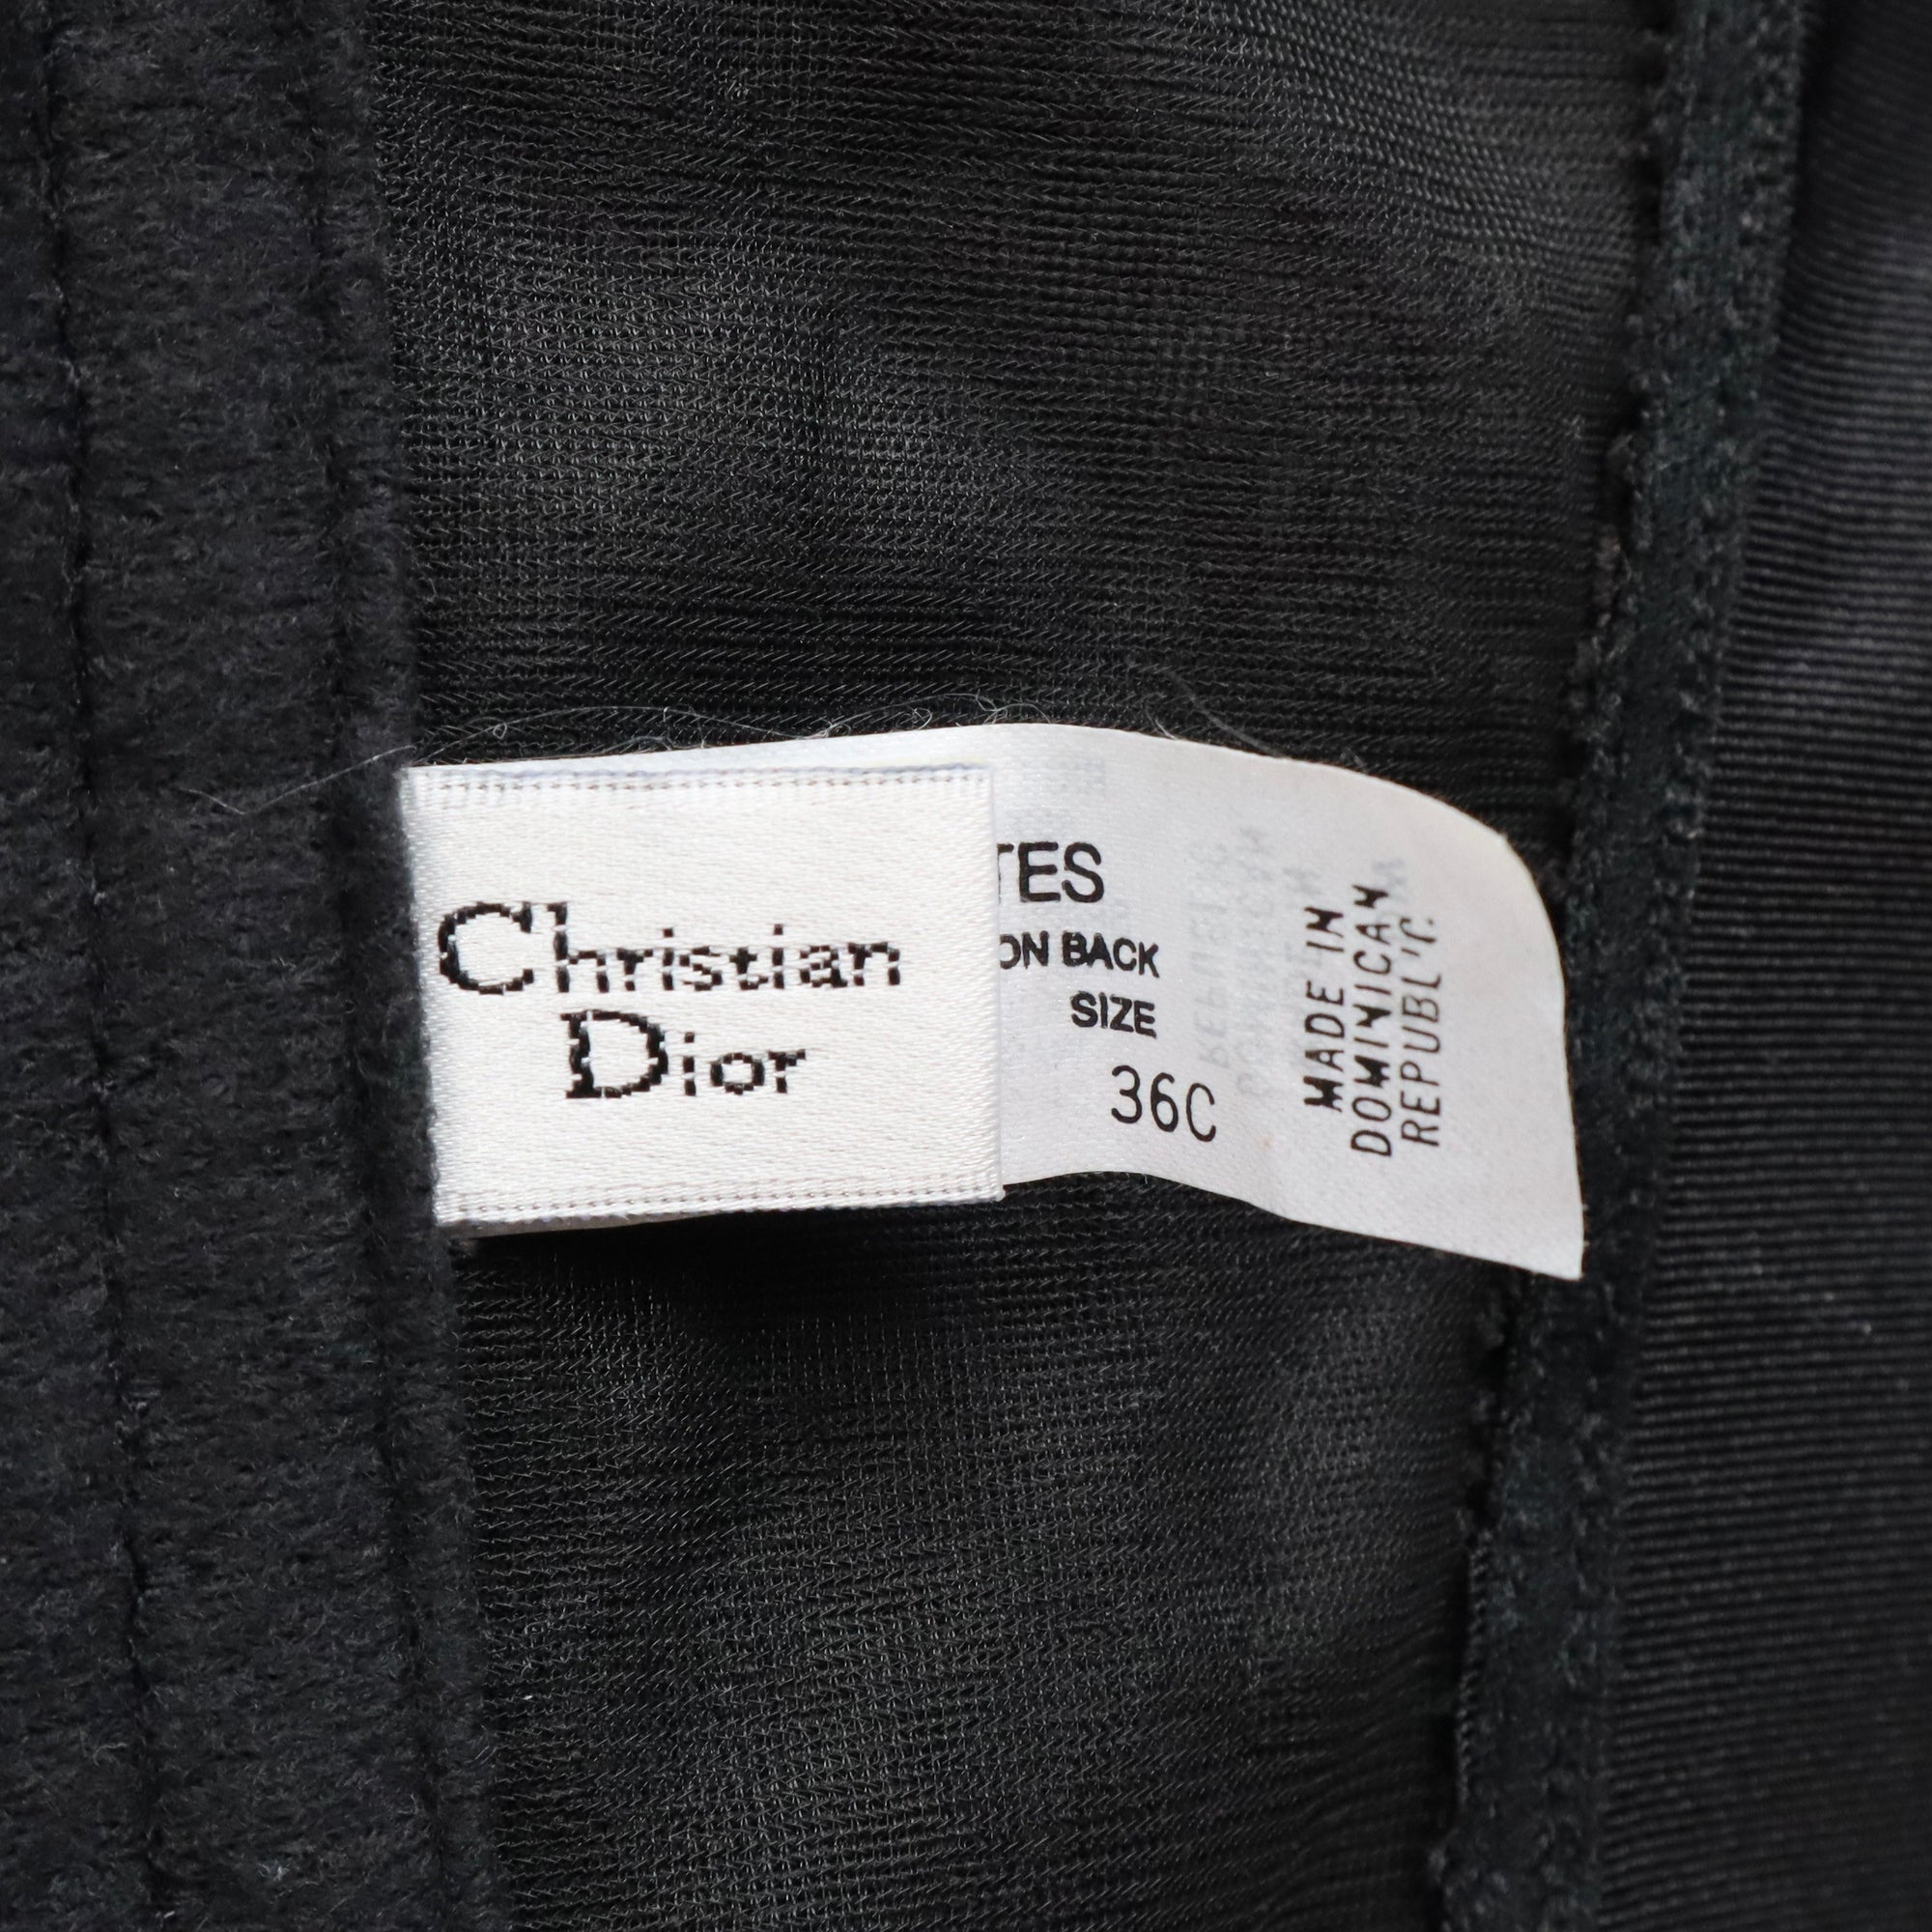 Rare Vintage 80s Christian Dior Black Corset